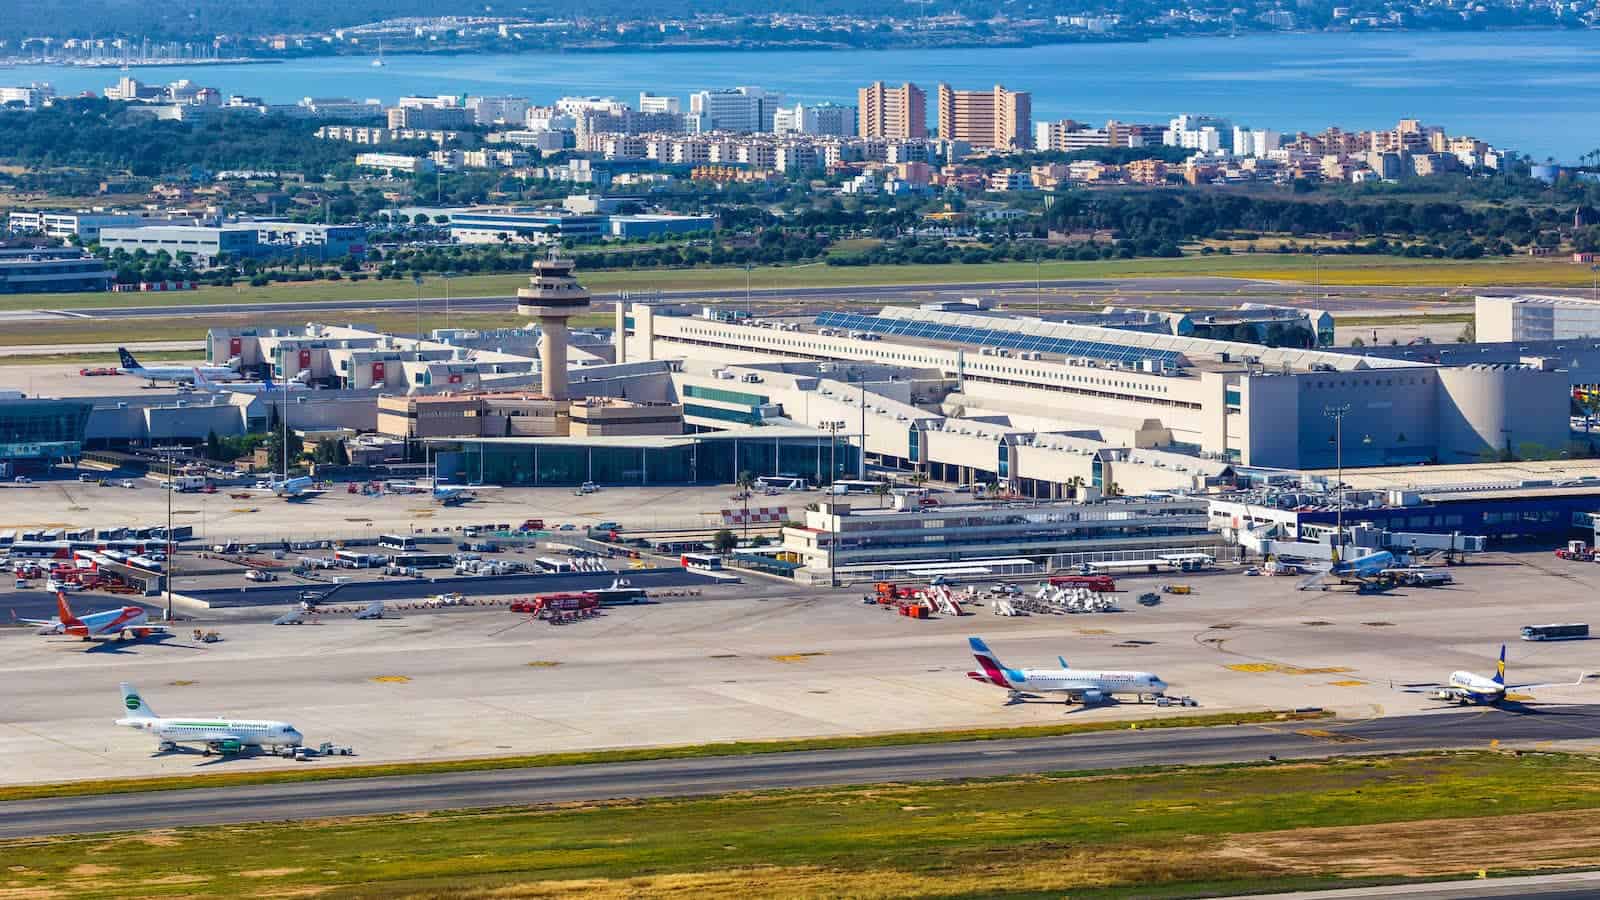 Palma de Mallorca Airport handled around 29 million passengers in 2022